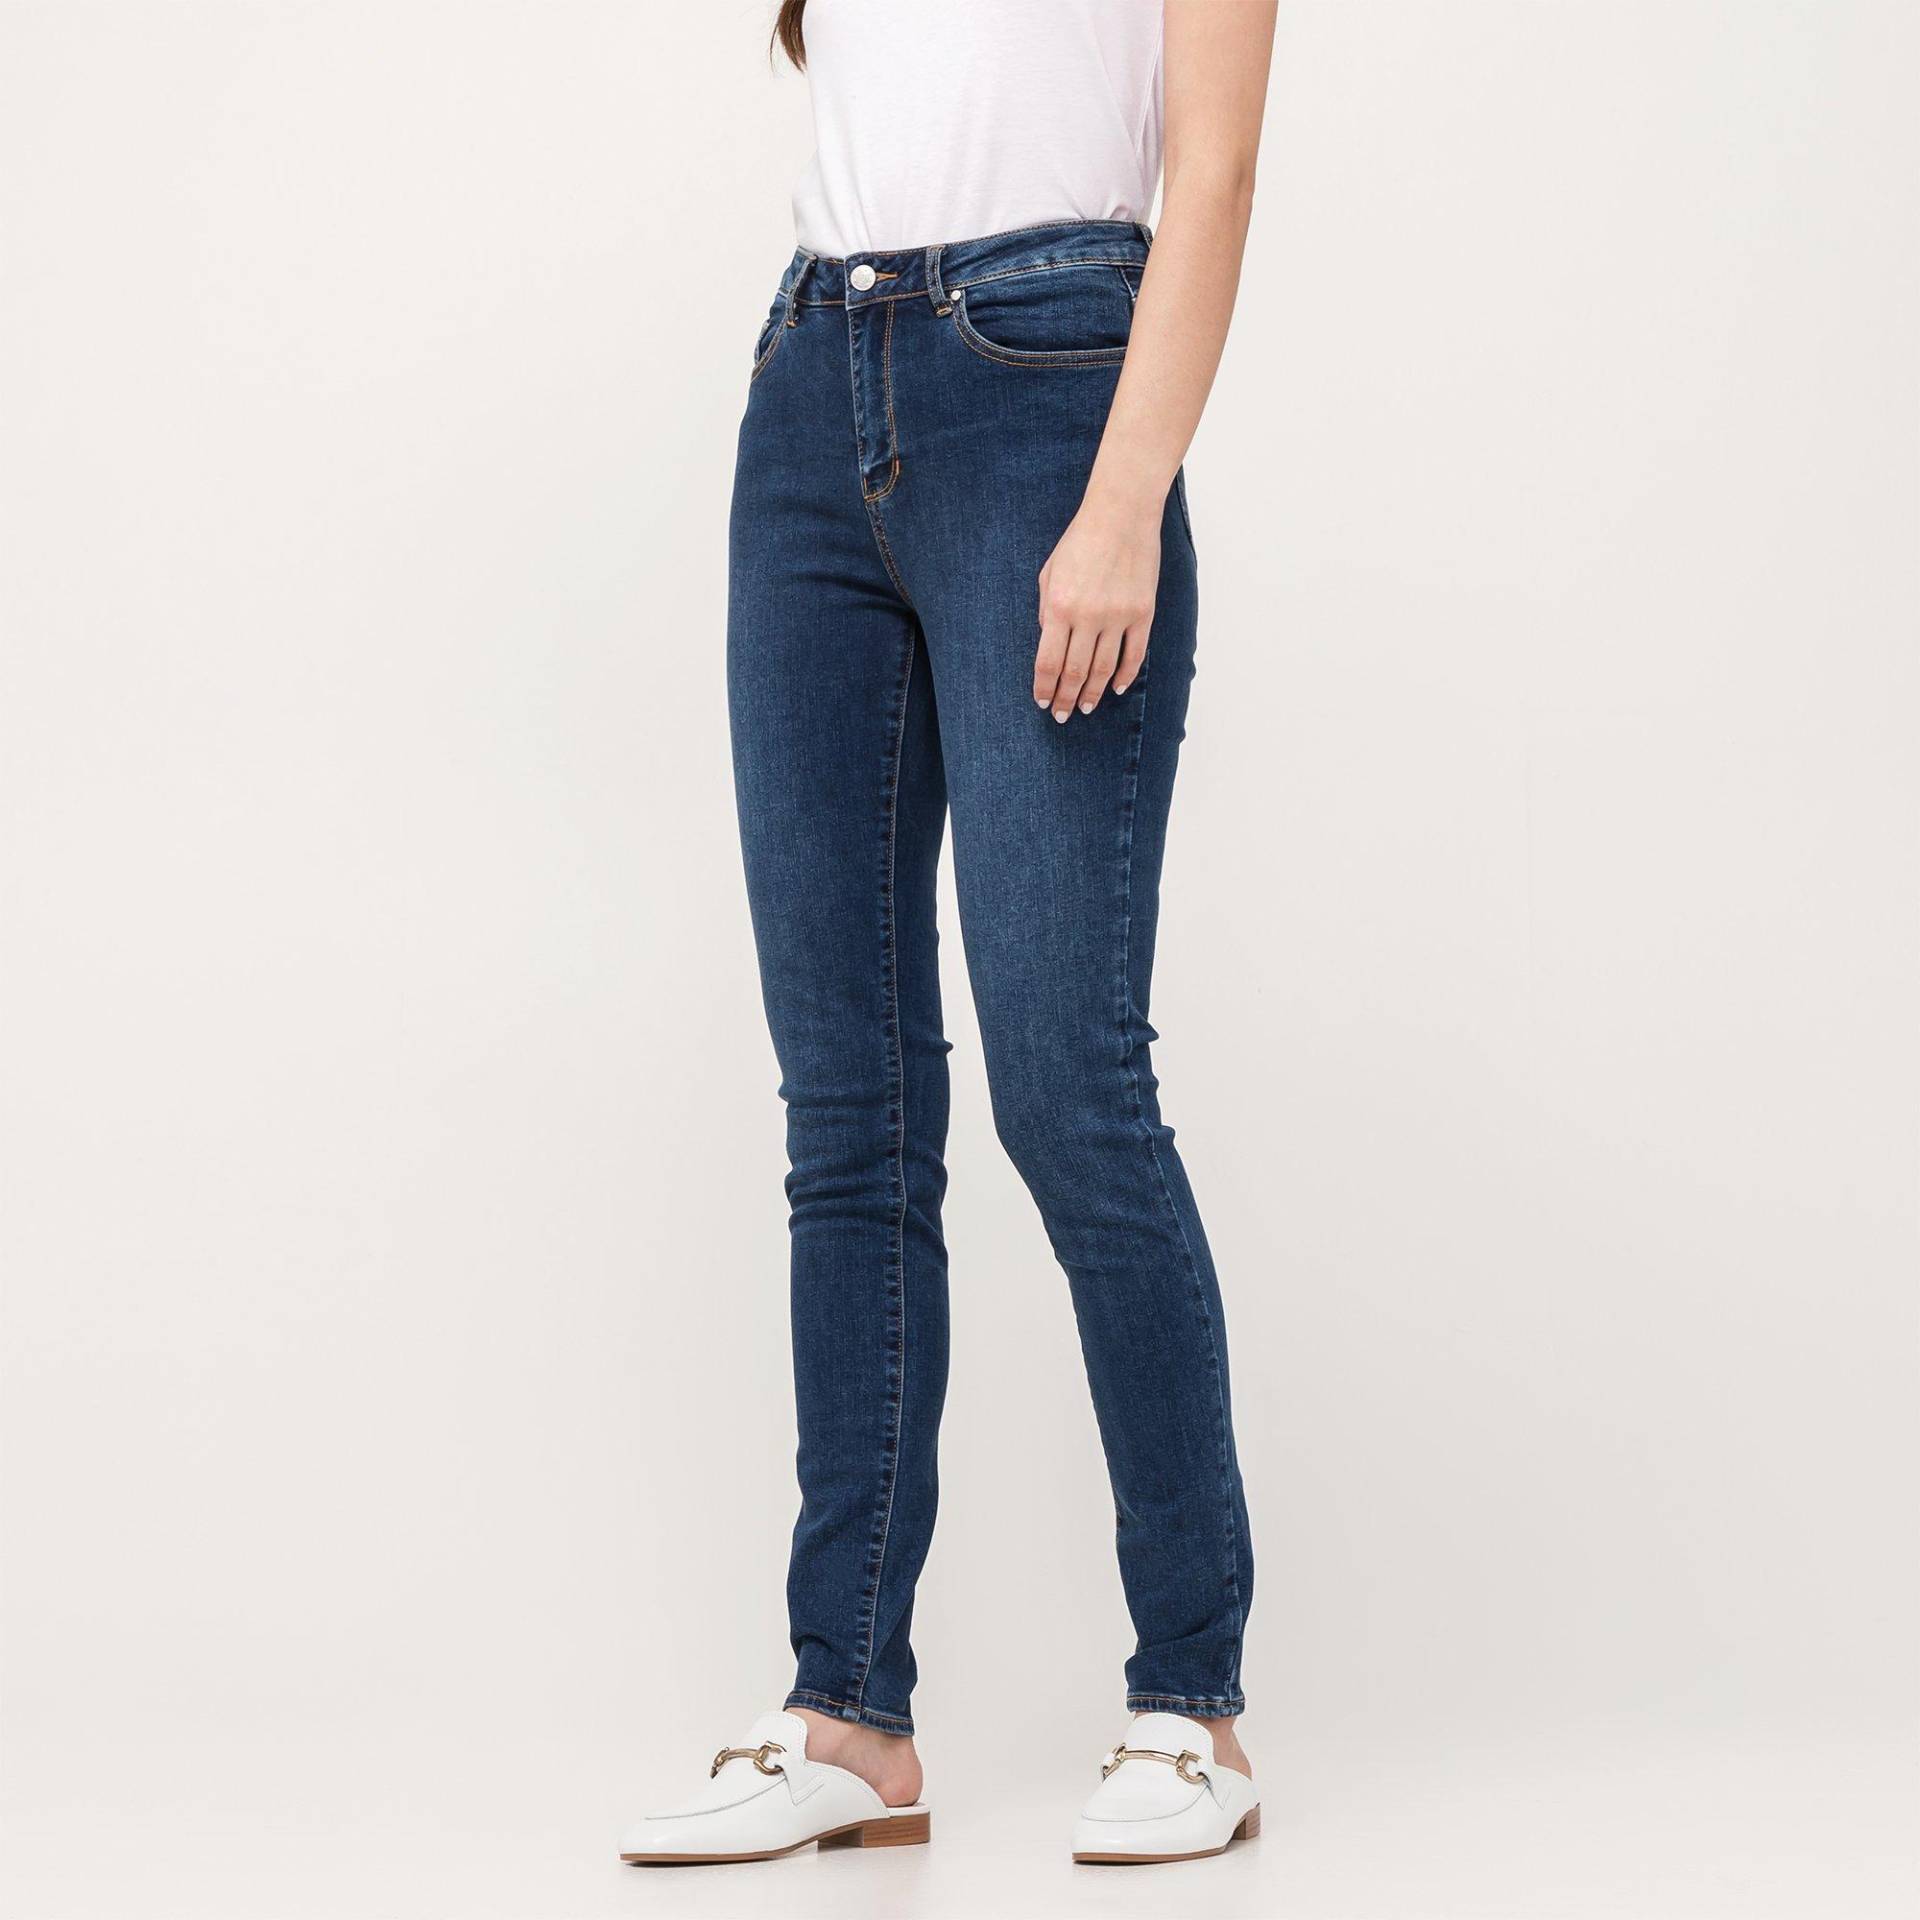 Jeans, Slim Fit Damen Blau Denim L30/W46 von Manor Woman